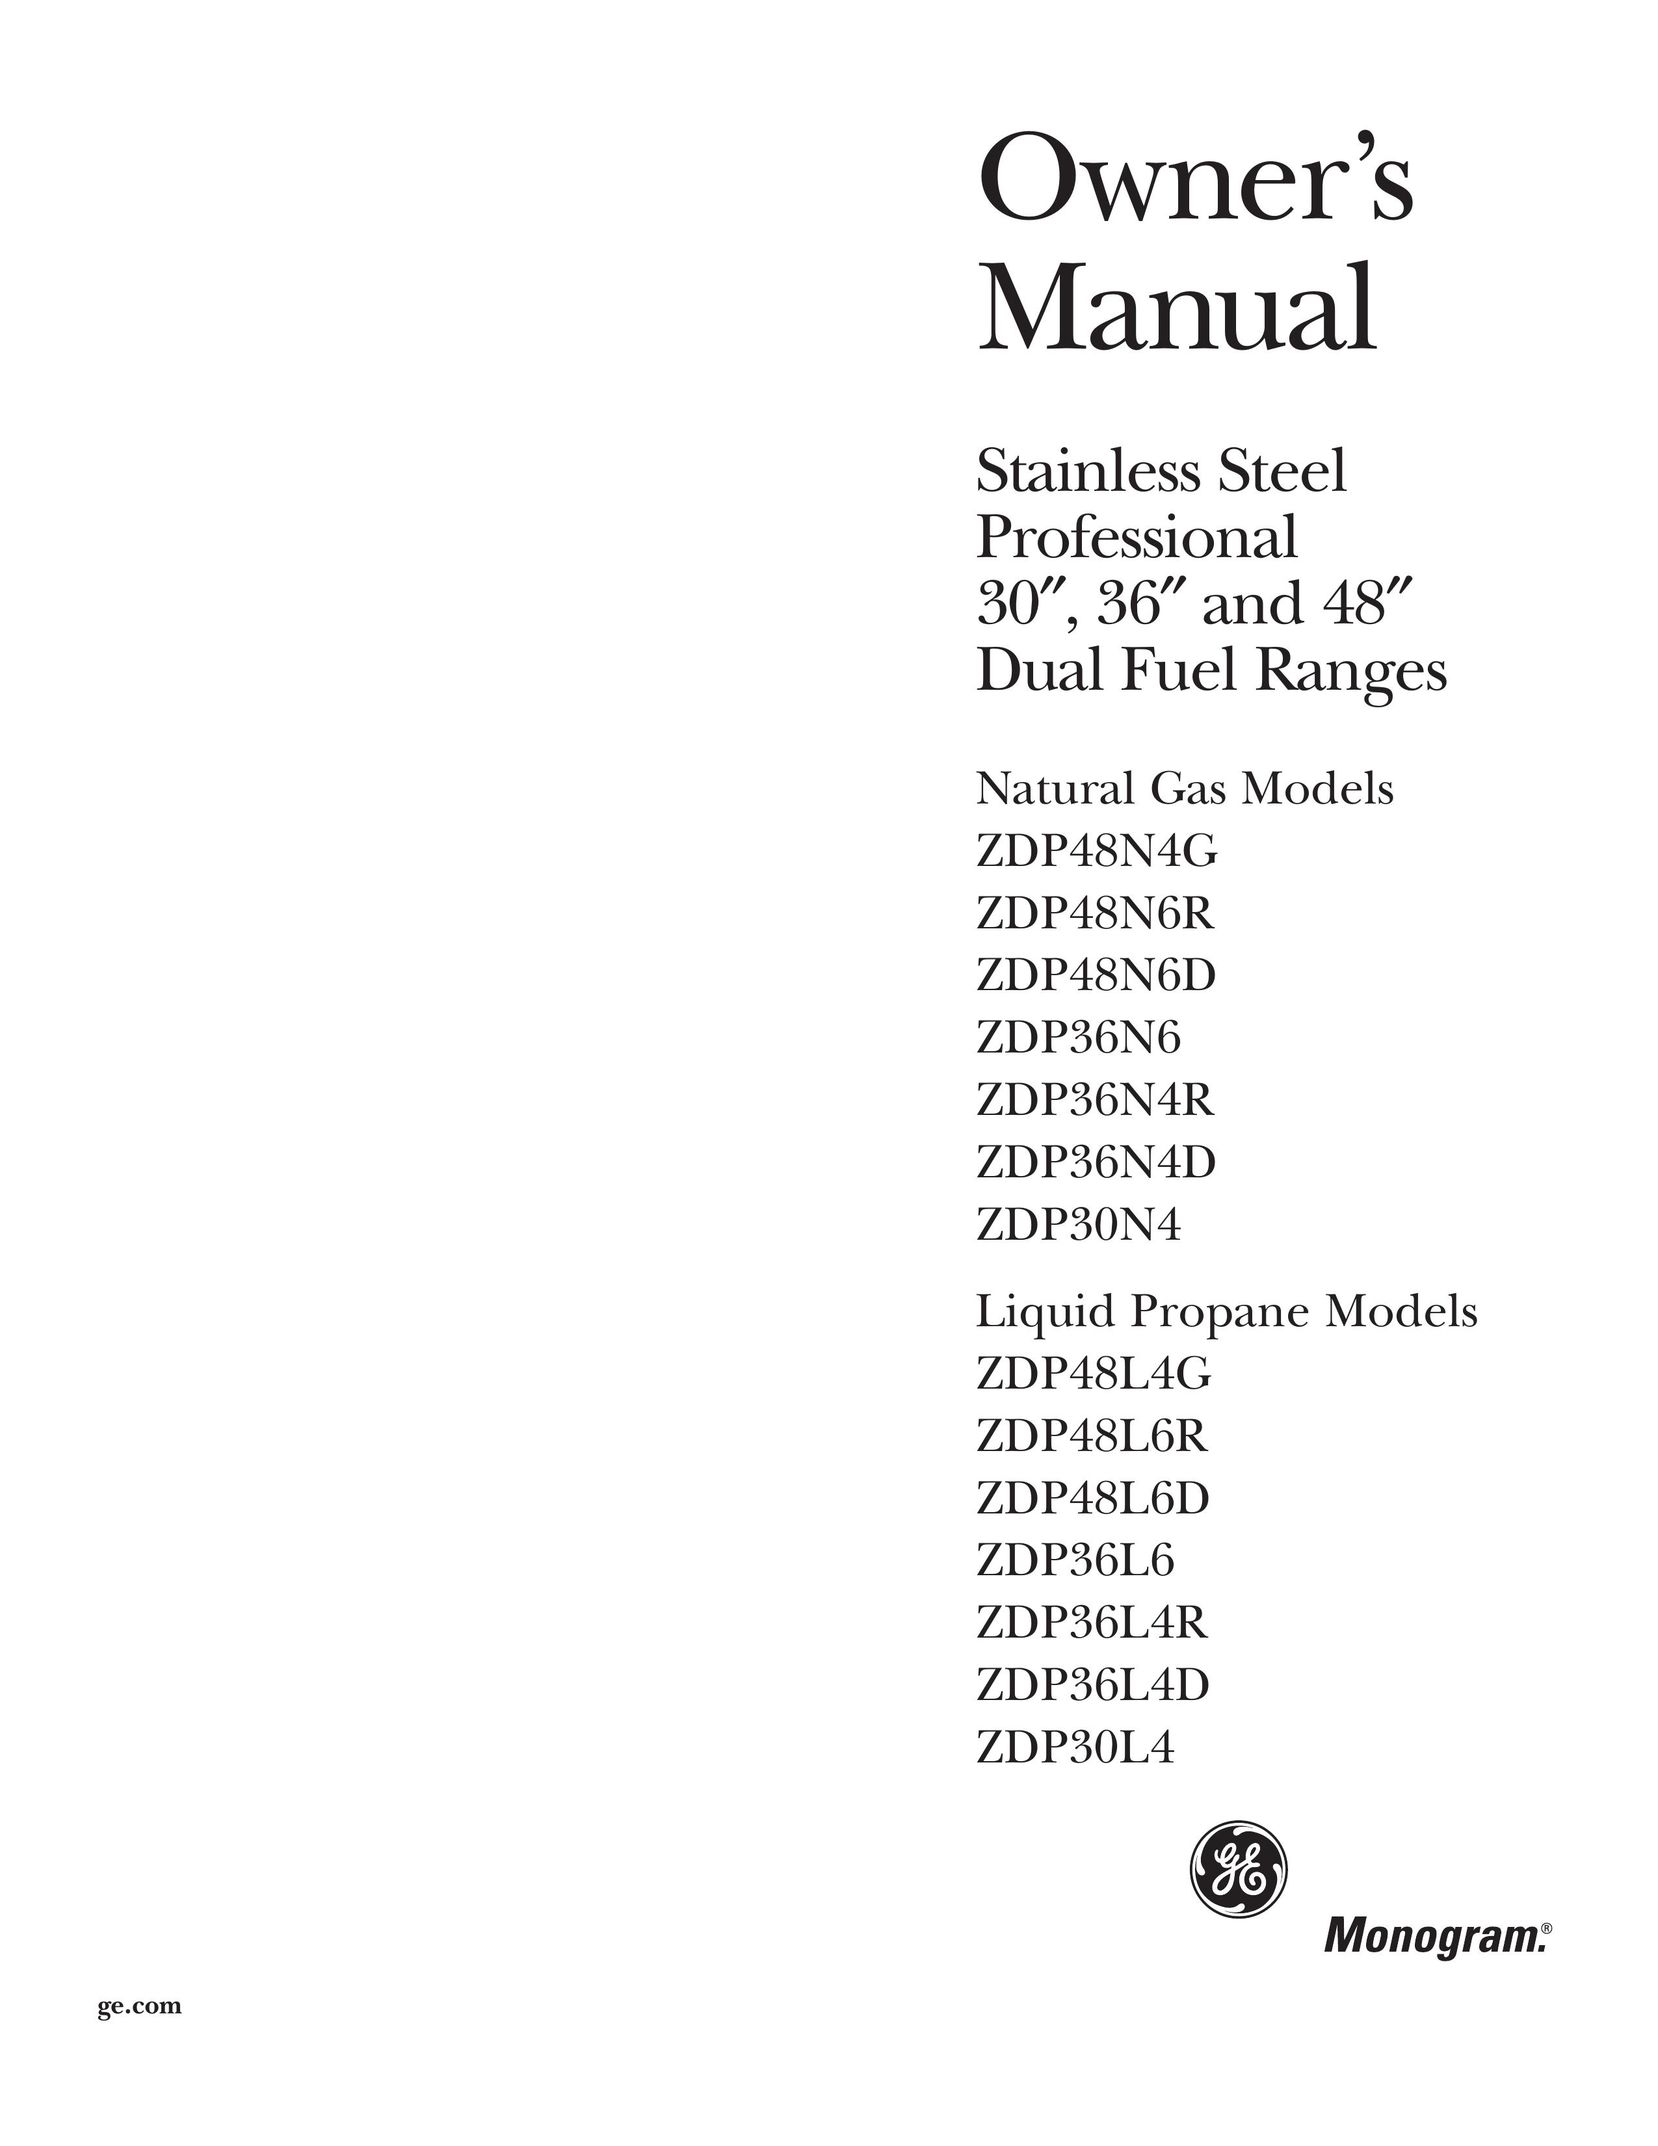 GE Monogram ZDP30N4 Liquid Propane Models ZDP48L4G Range User Manual